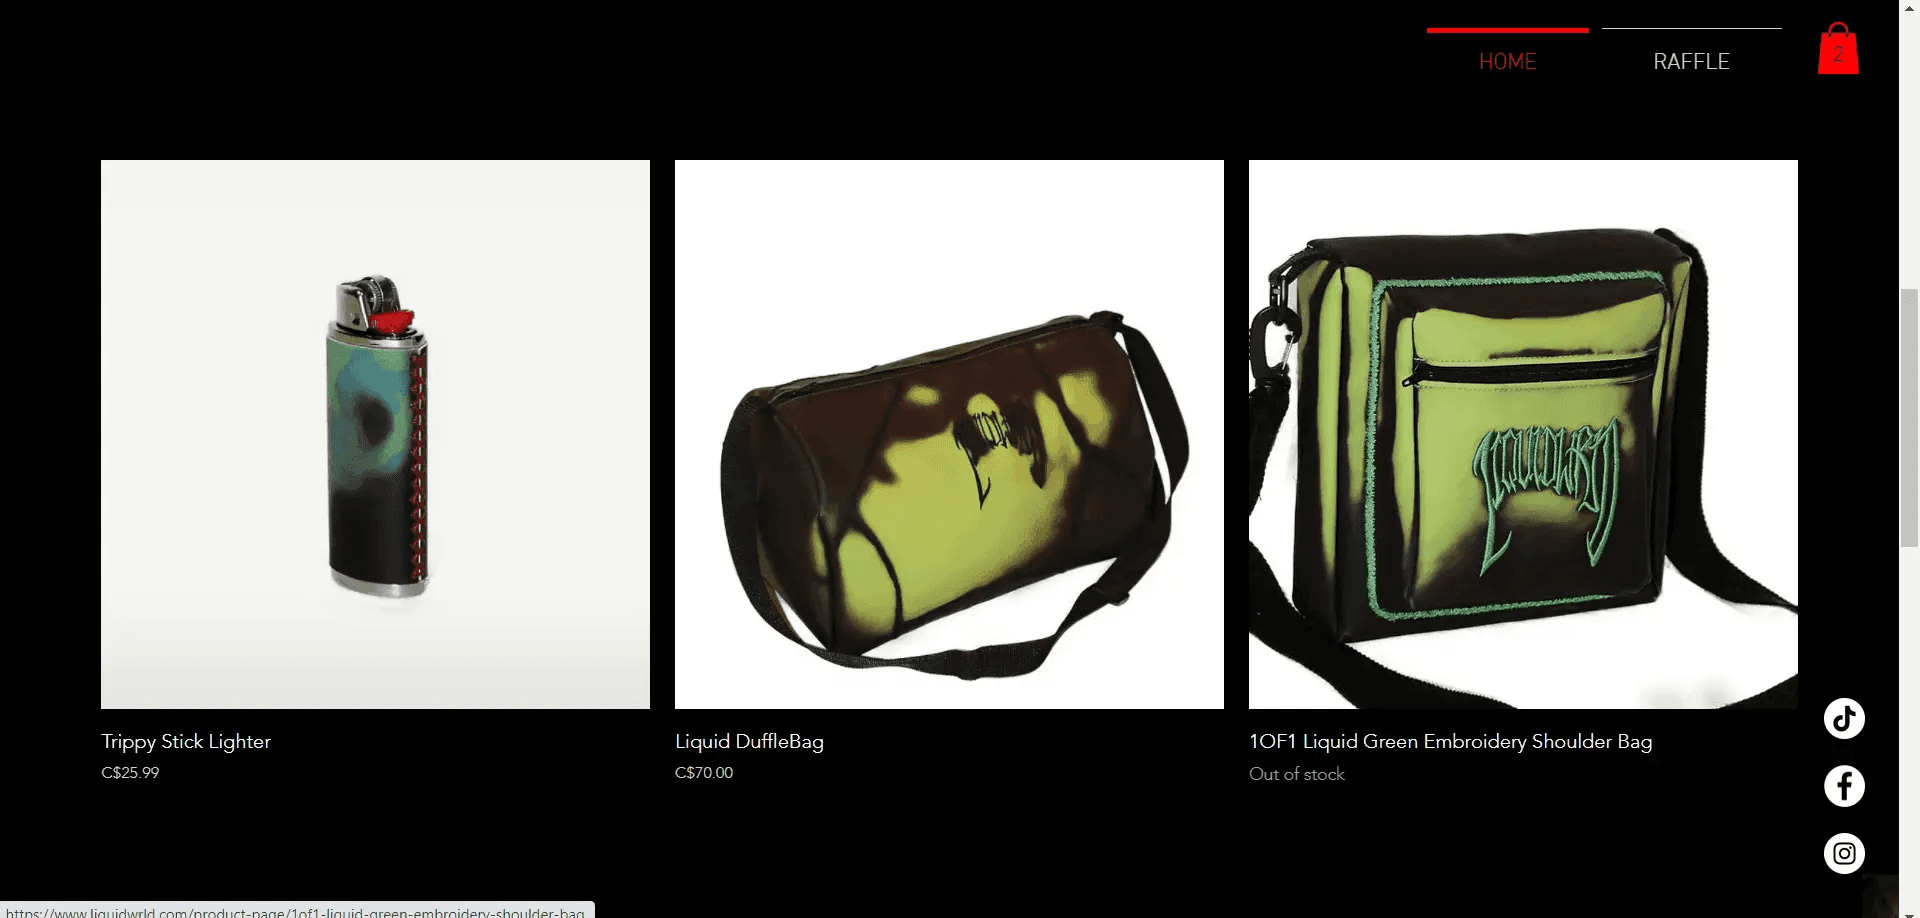 A custom lighter, dufflebag, and shoulder bag